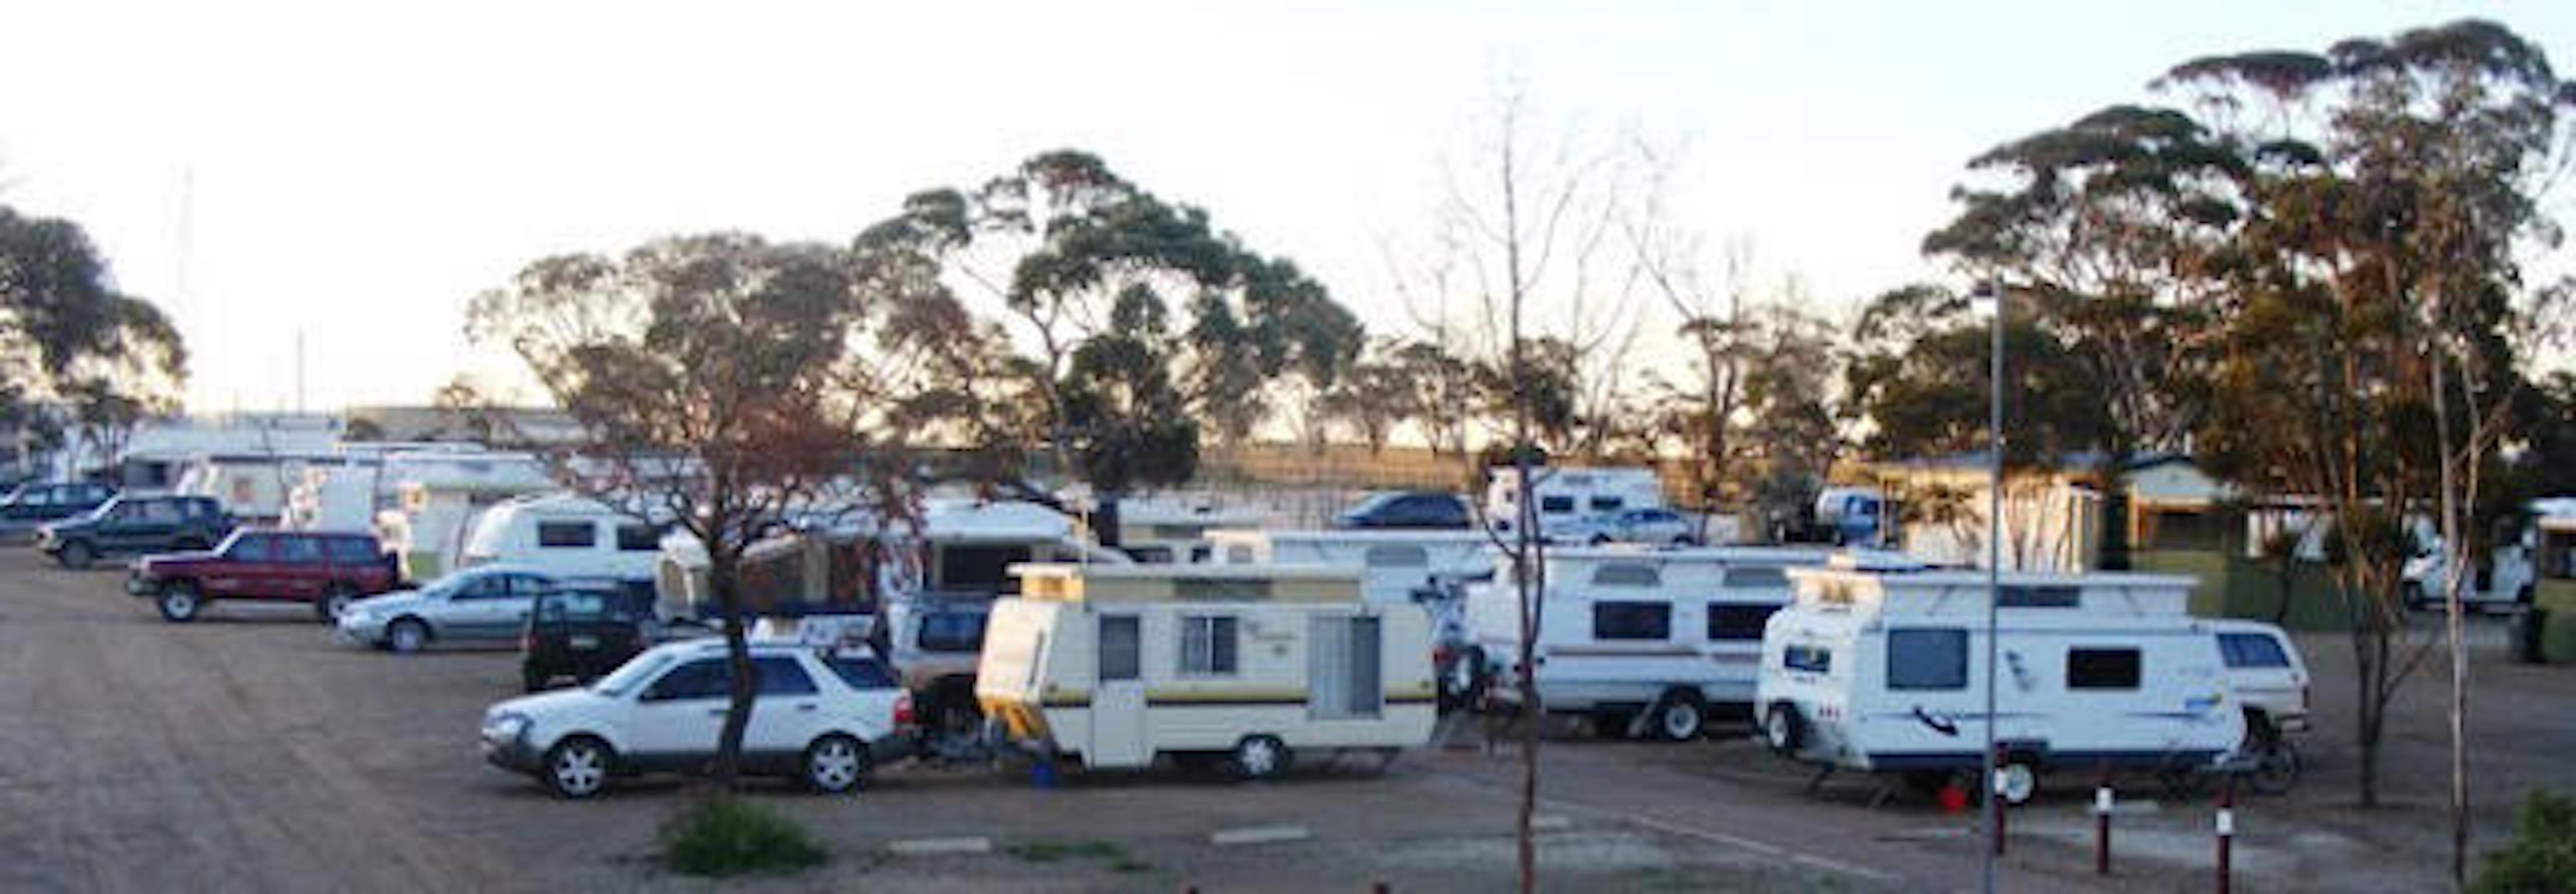 Woomera Traveller's Village and Caravan Park - Lennox Head Accommodation